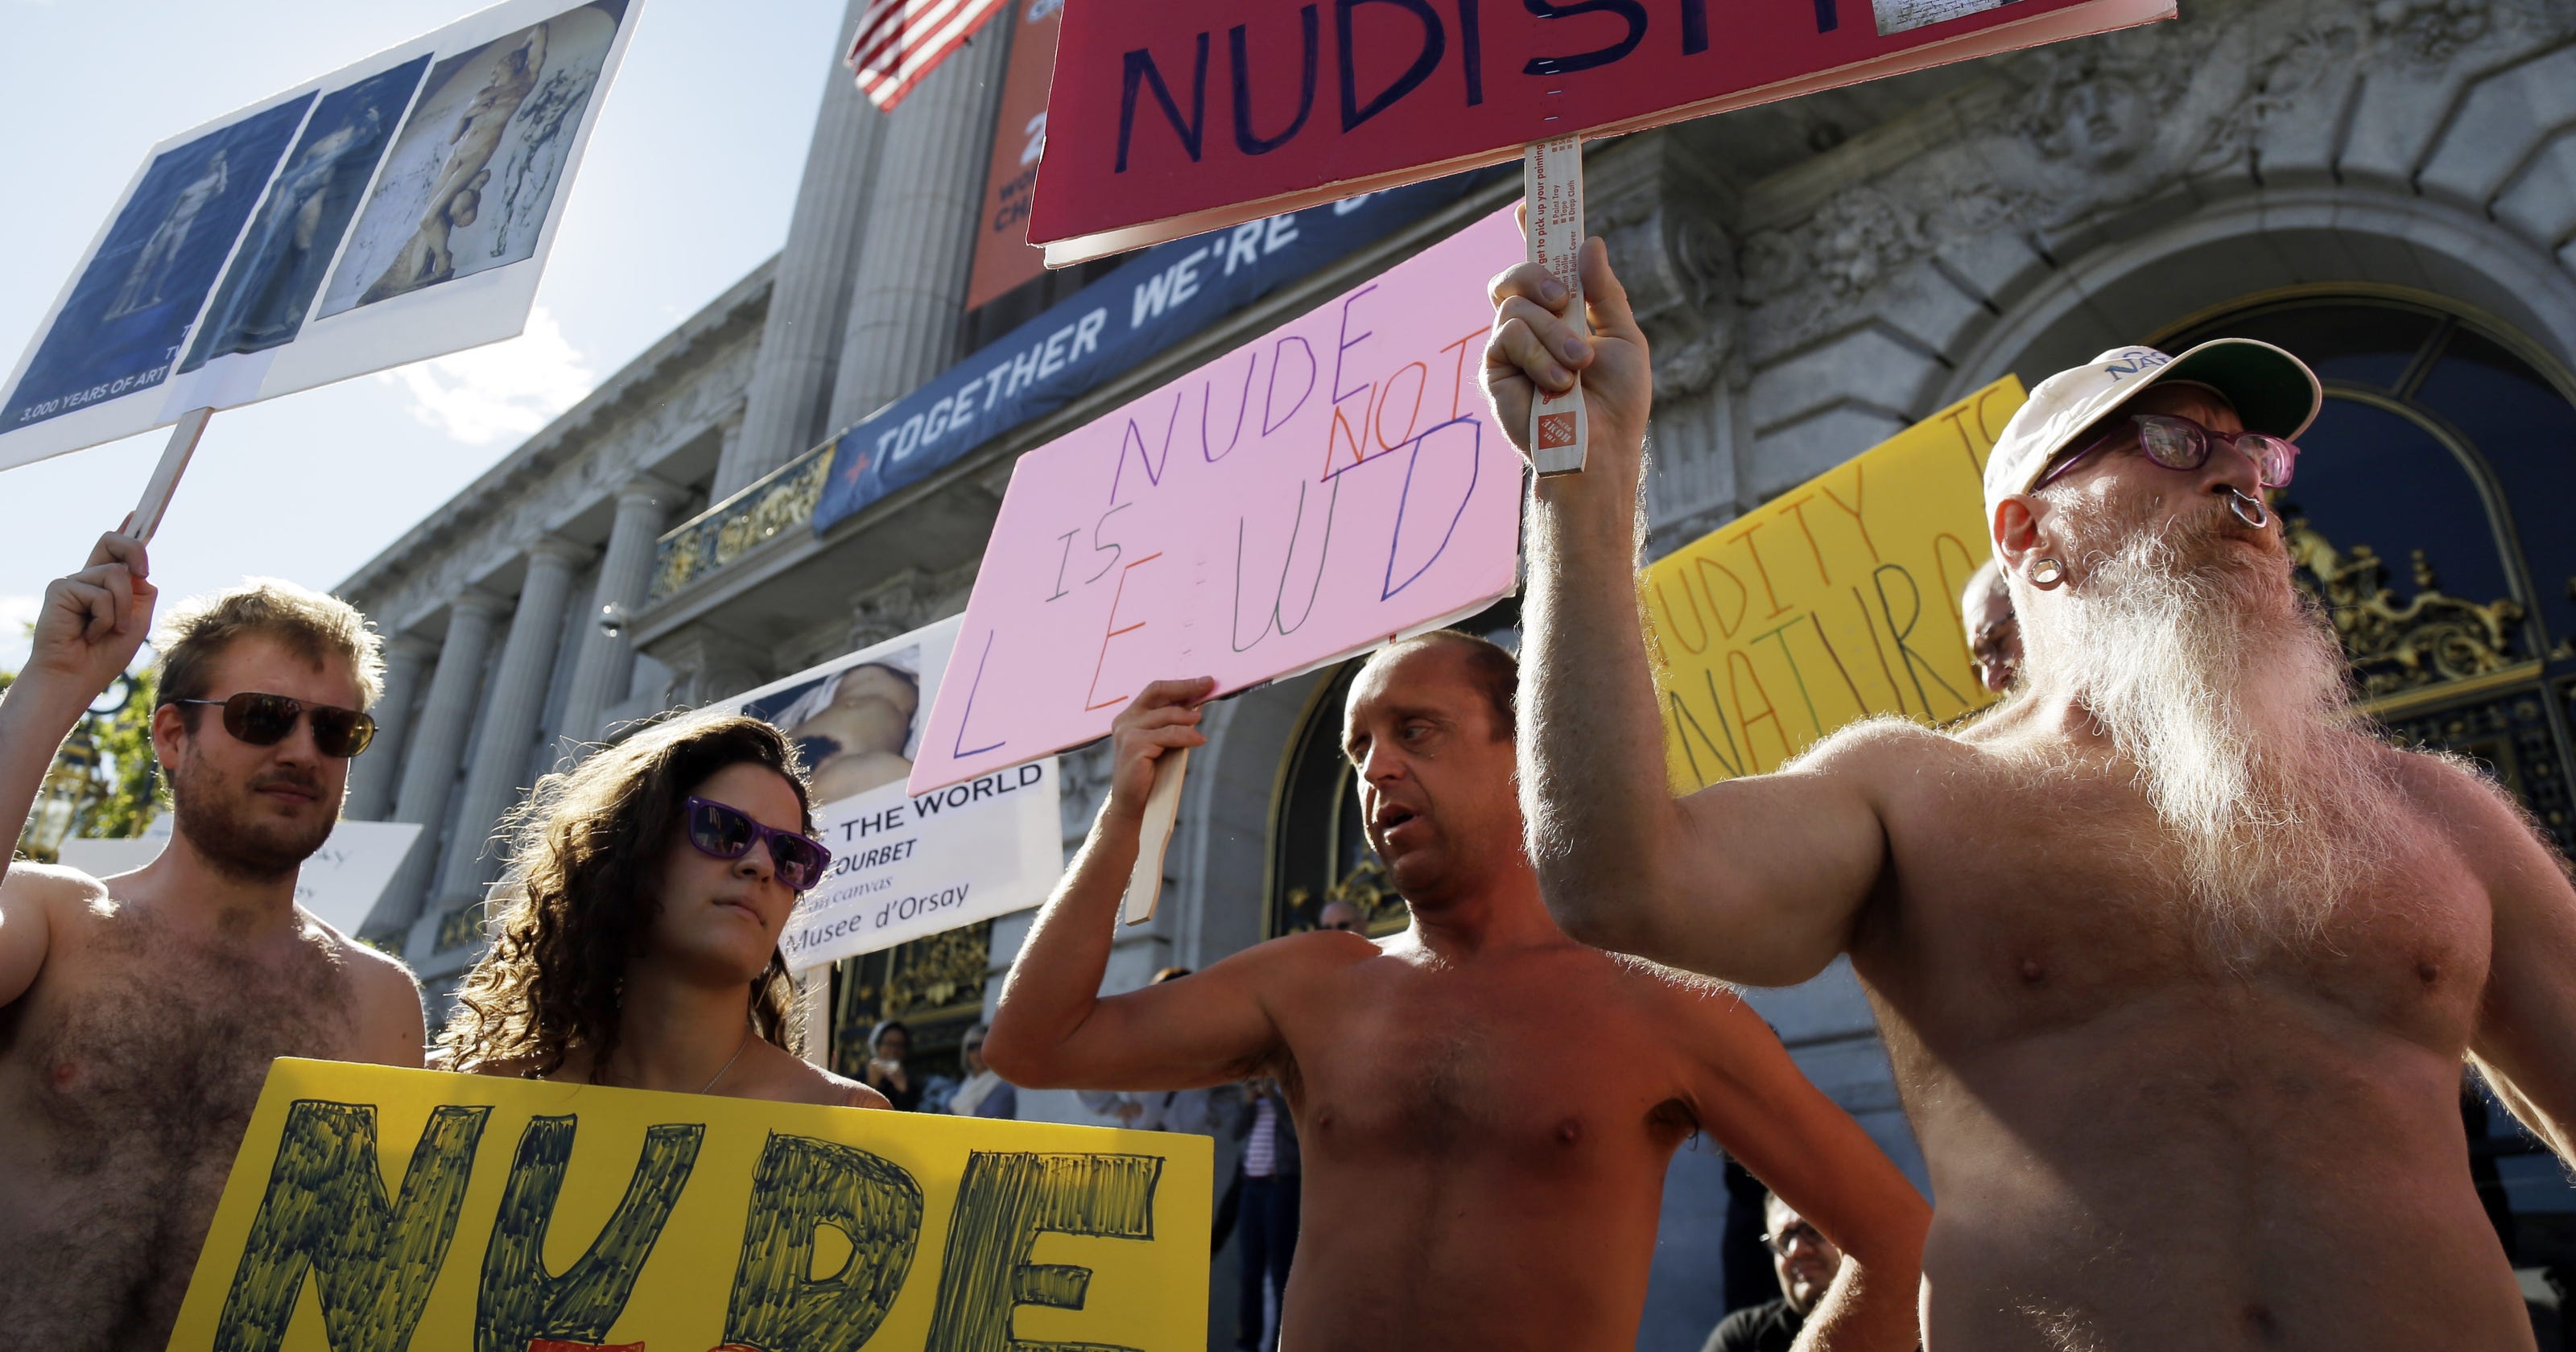 San Francisco lawmakers vote to ban public nudity - CSMonitor.com